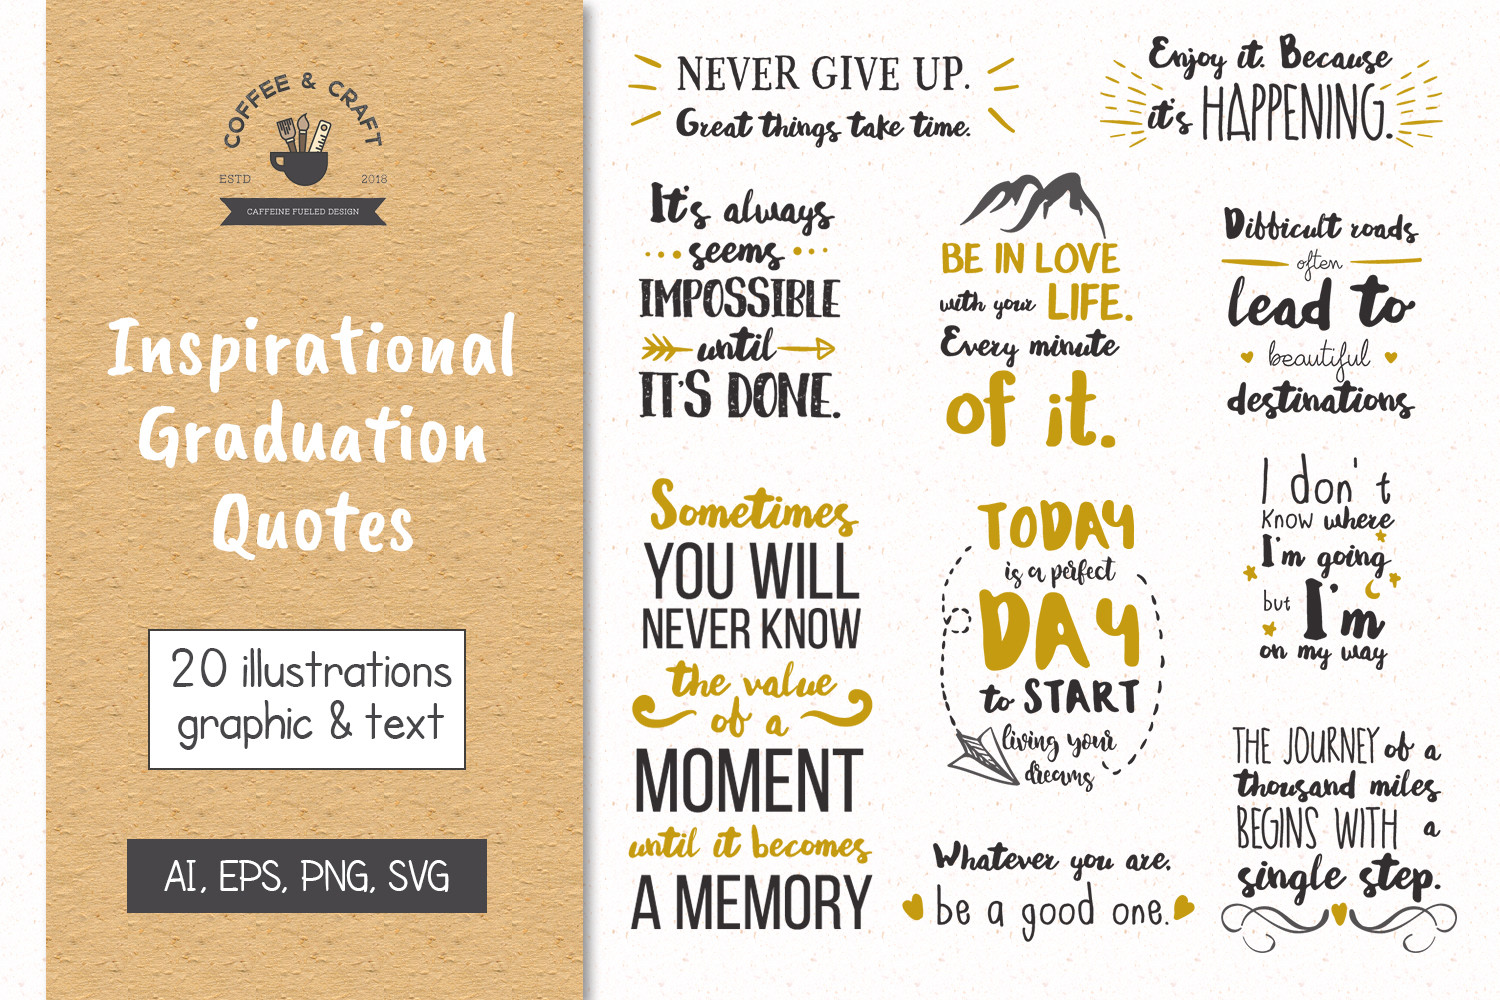 College Graduation Inspirational Quotes
 Inspirational Graduation Quotes